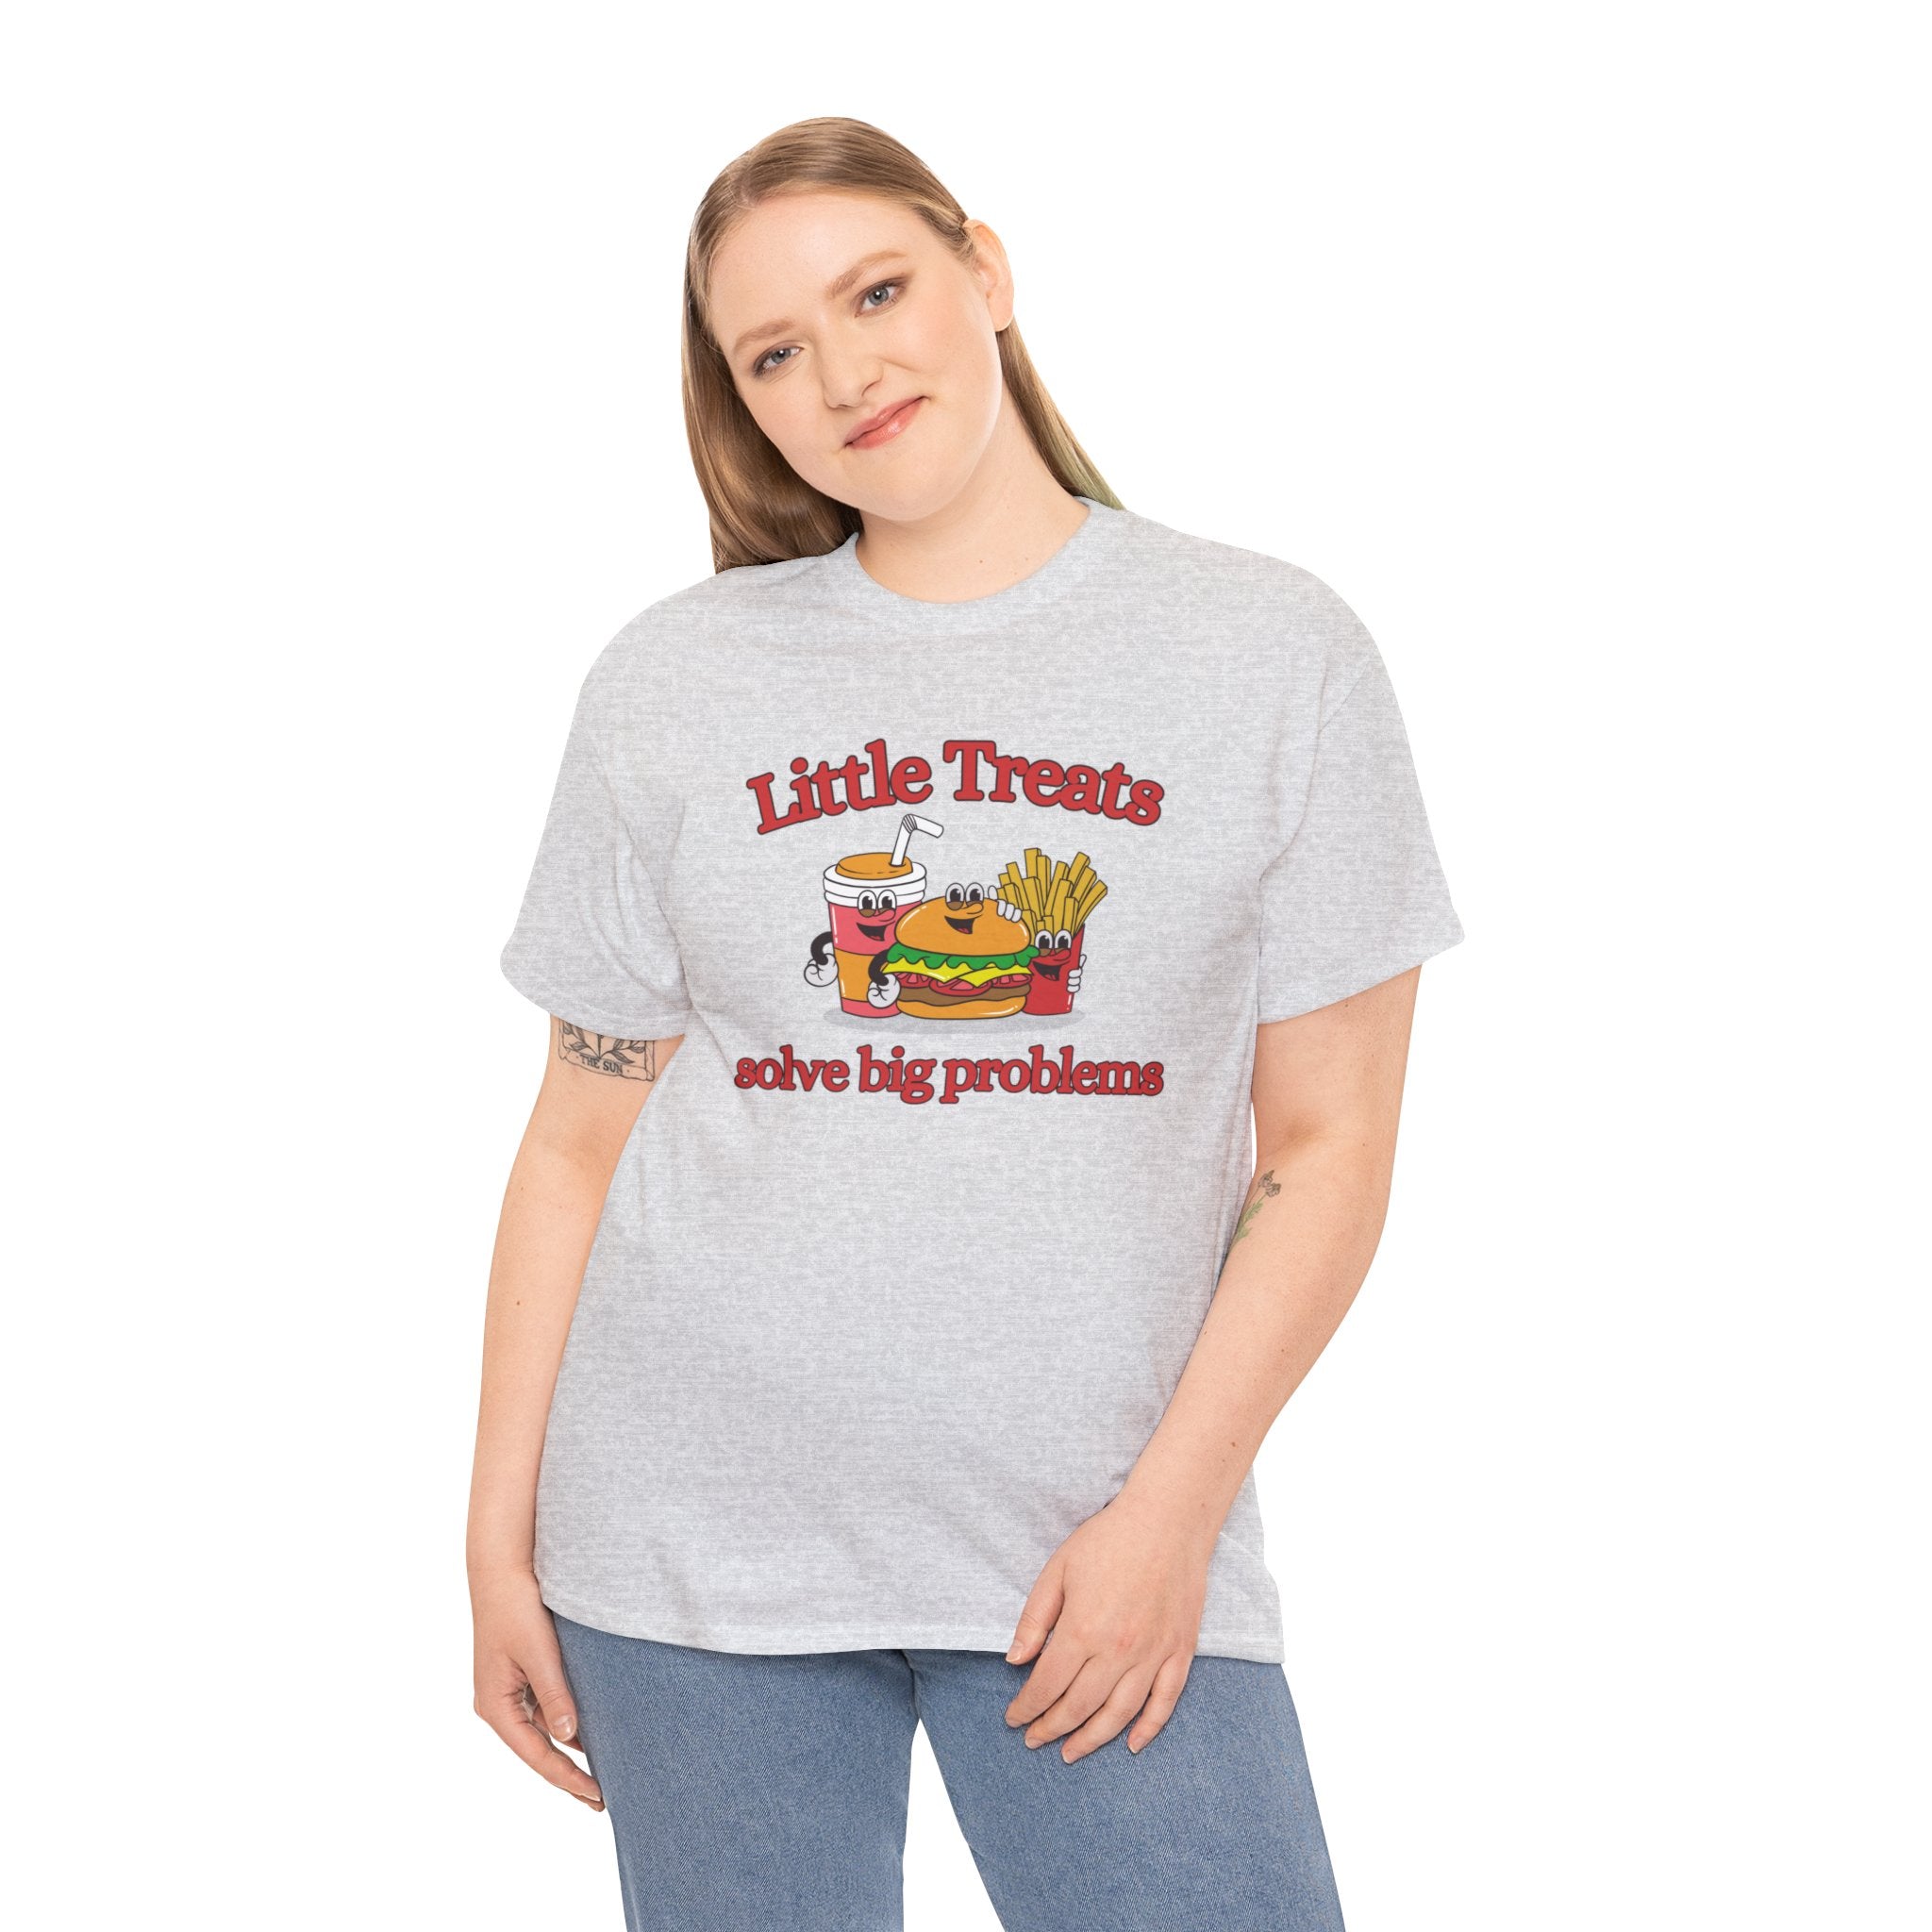 Little treats solve big problems | graphic tee | funny shirt | vintage shirt | sarcastic t-shirt retro cartoon tee